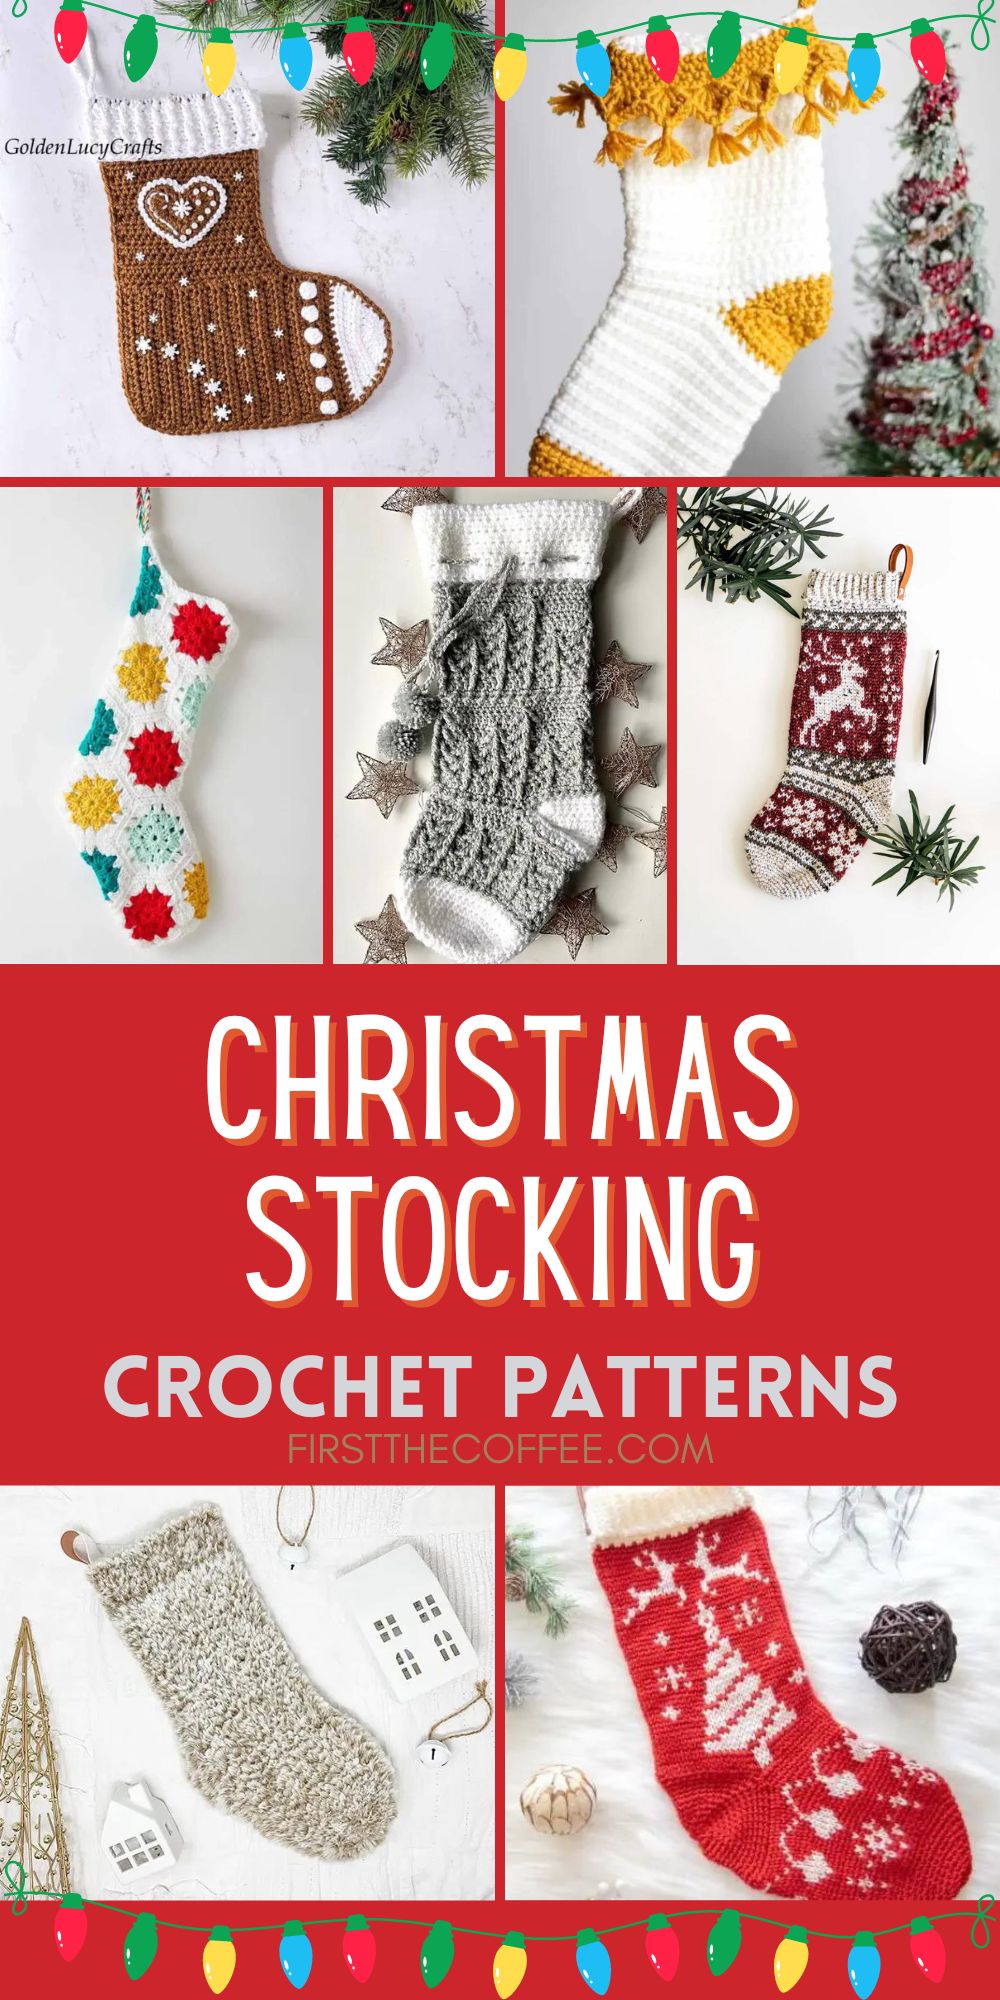 Crochet Patterns for Christmas Stockings